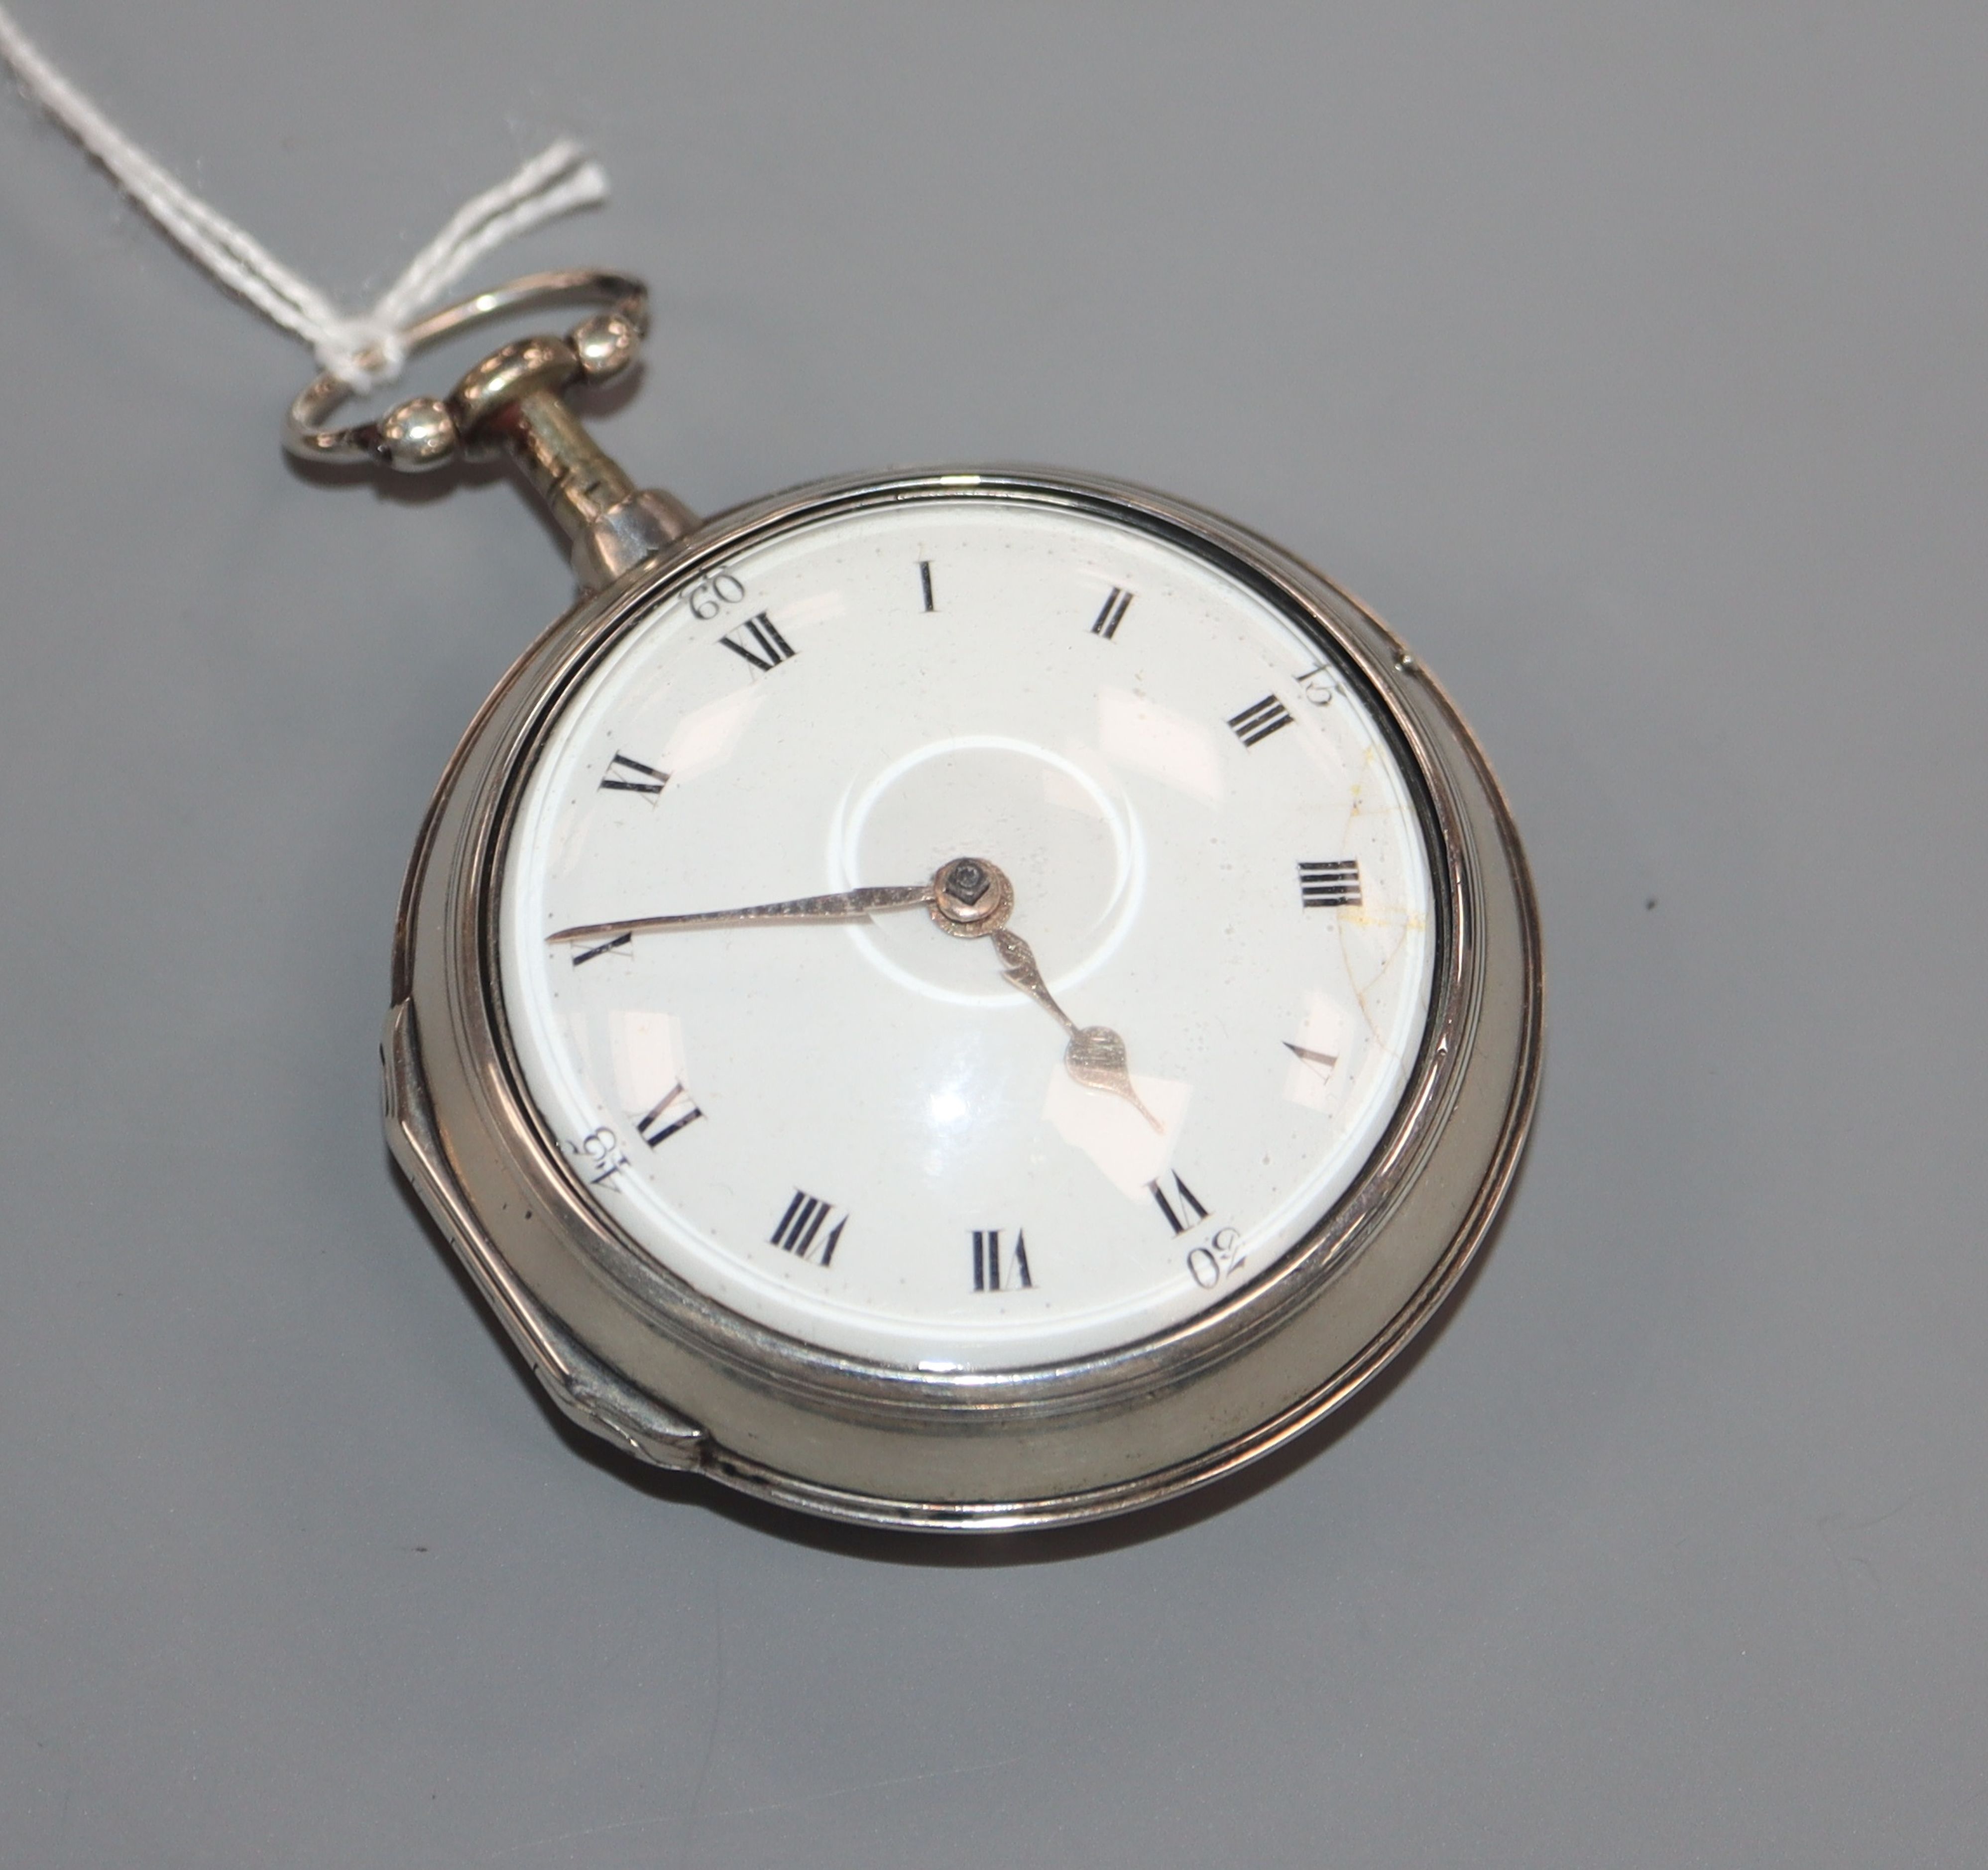 William Morgan, London, a George III silver pair-cased key-wind pocket watch.